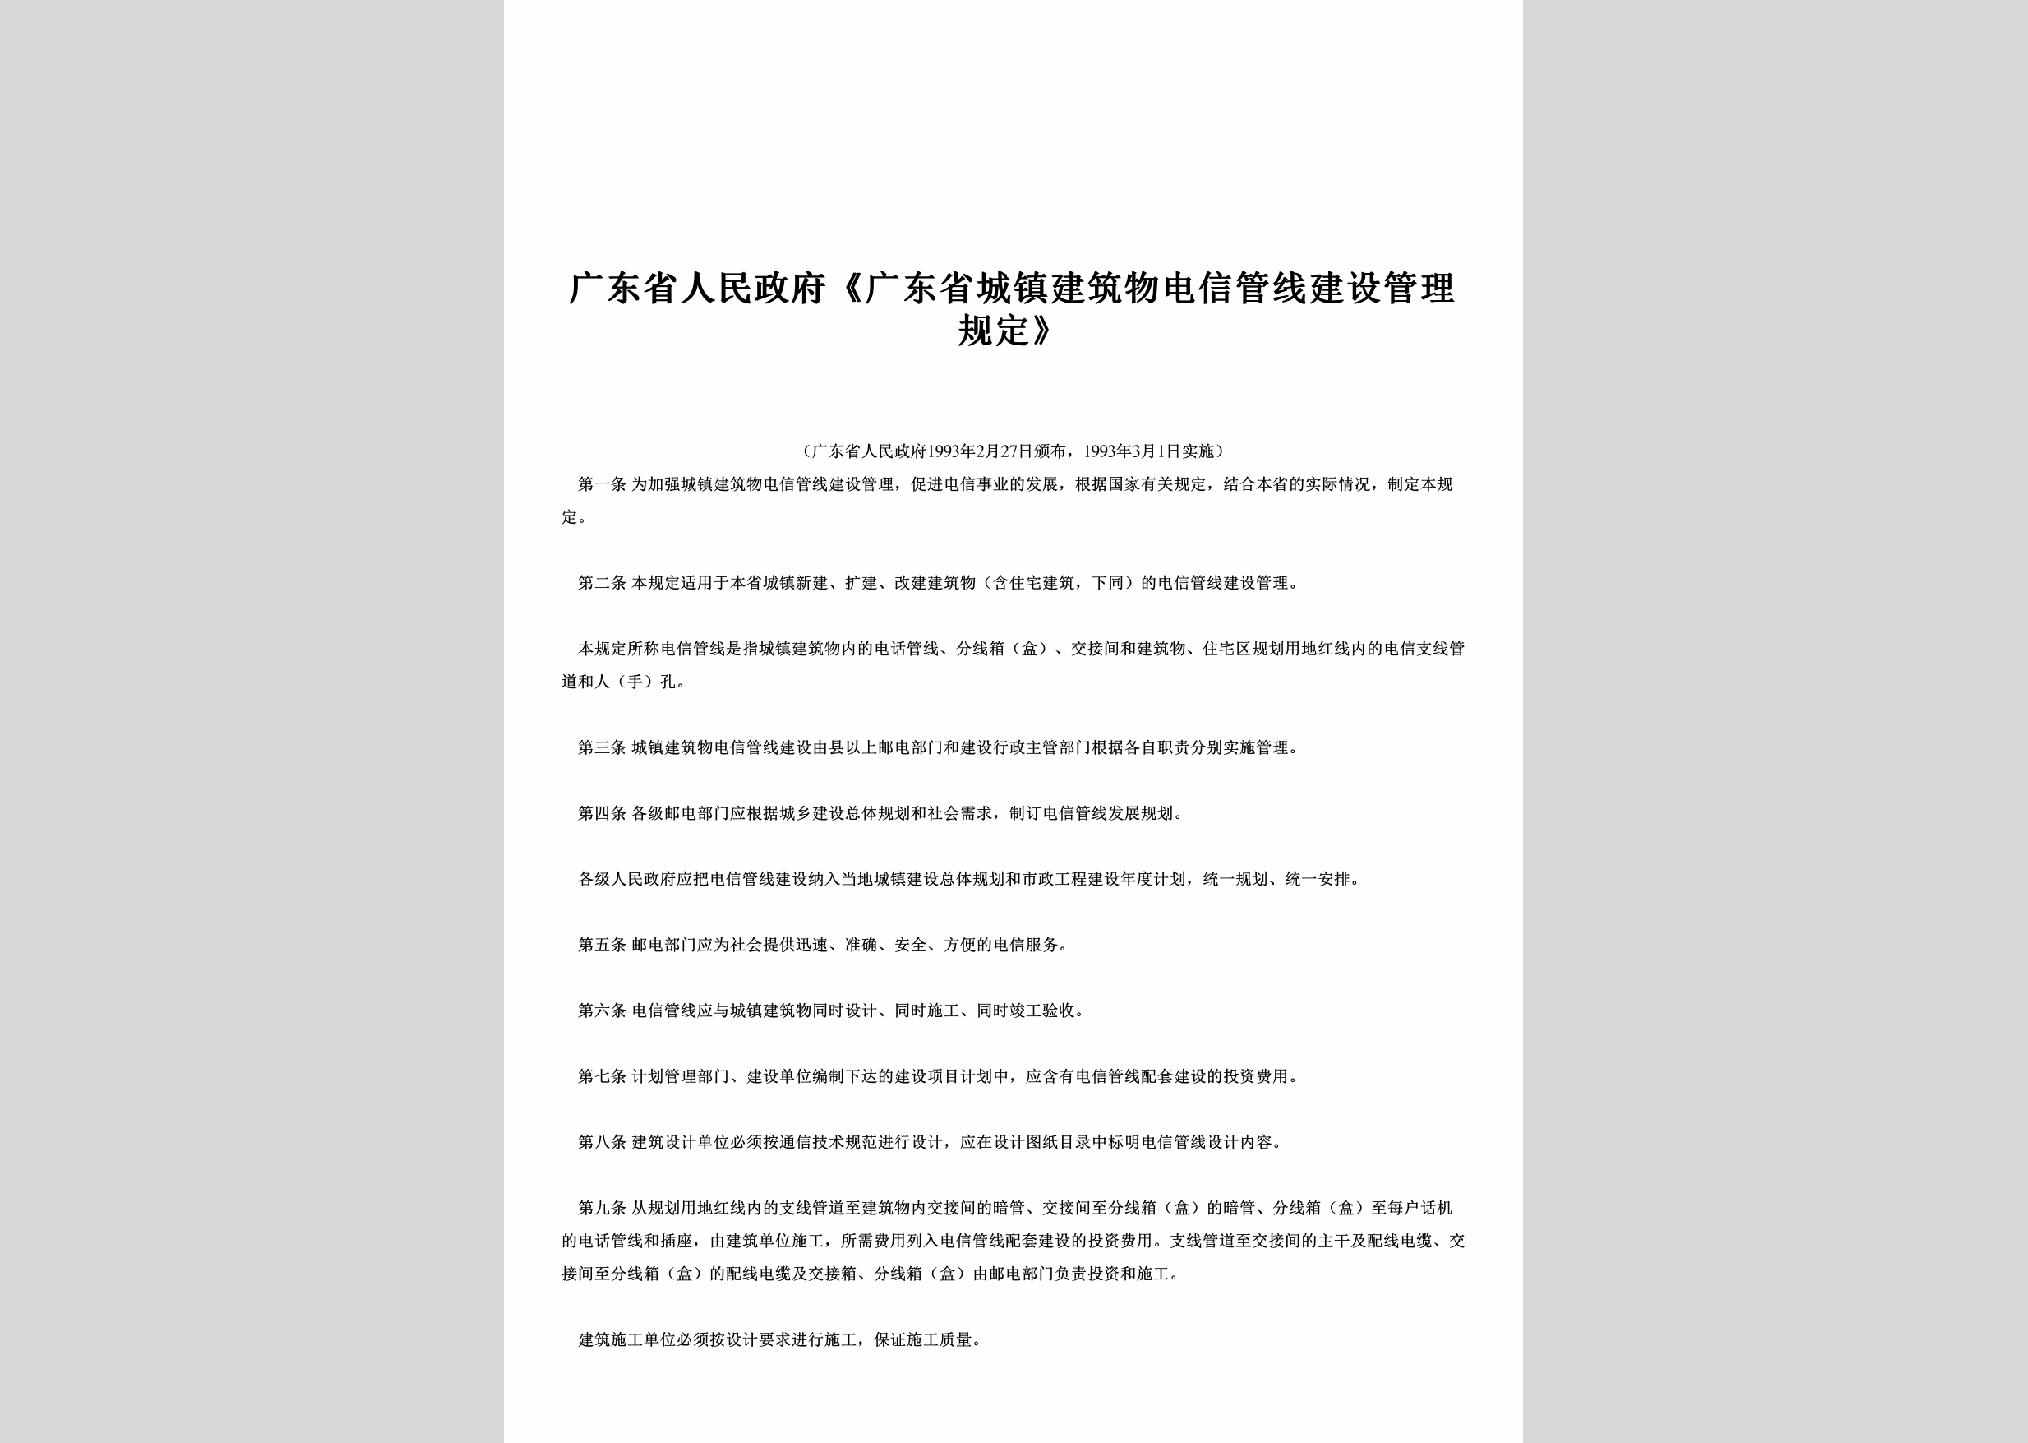 GD-CZJSGLGD-1993：《广东省城镇建筑物电信管线建设管理规定》